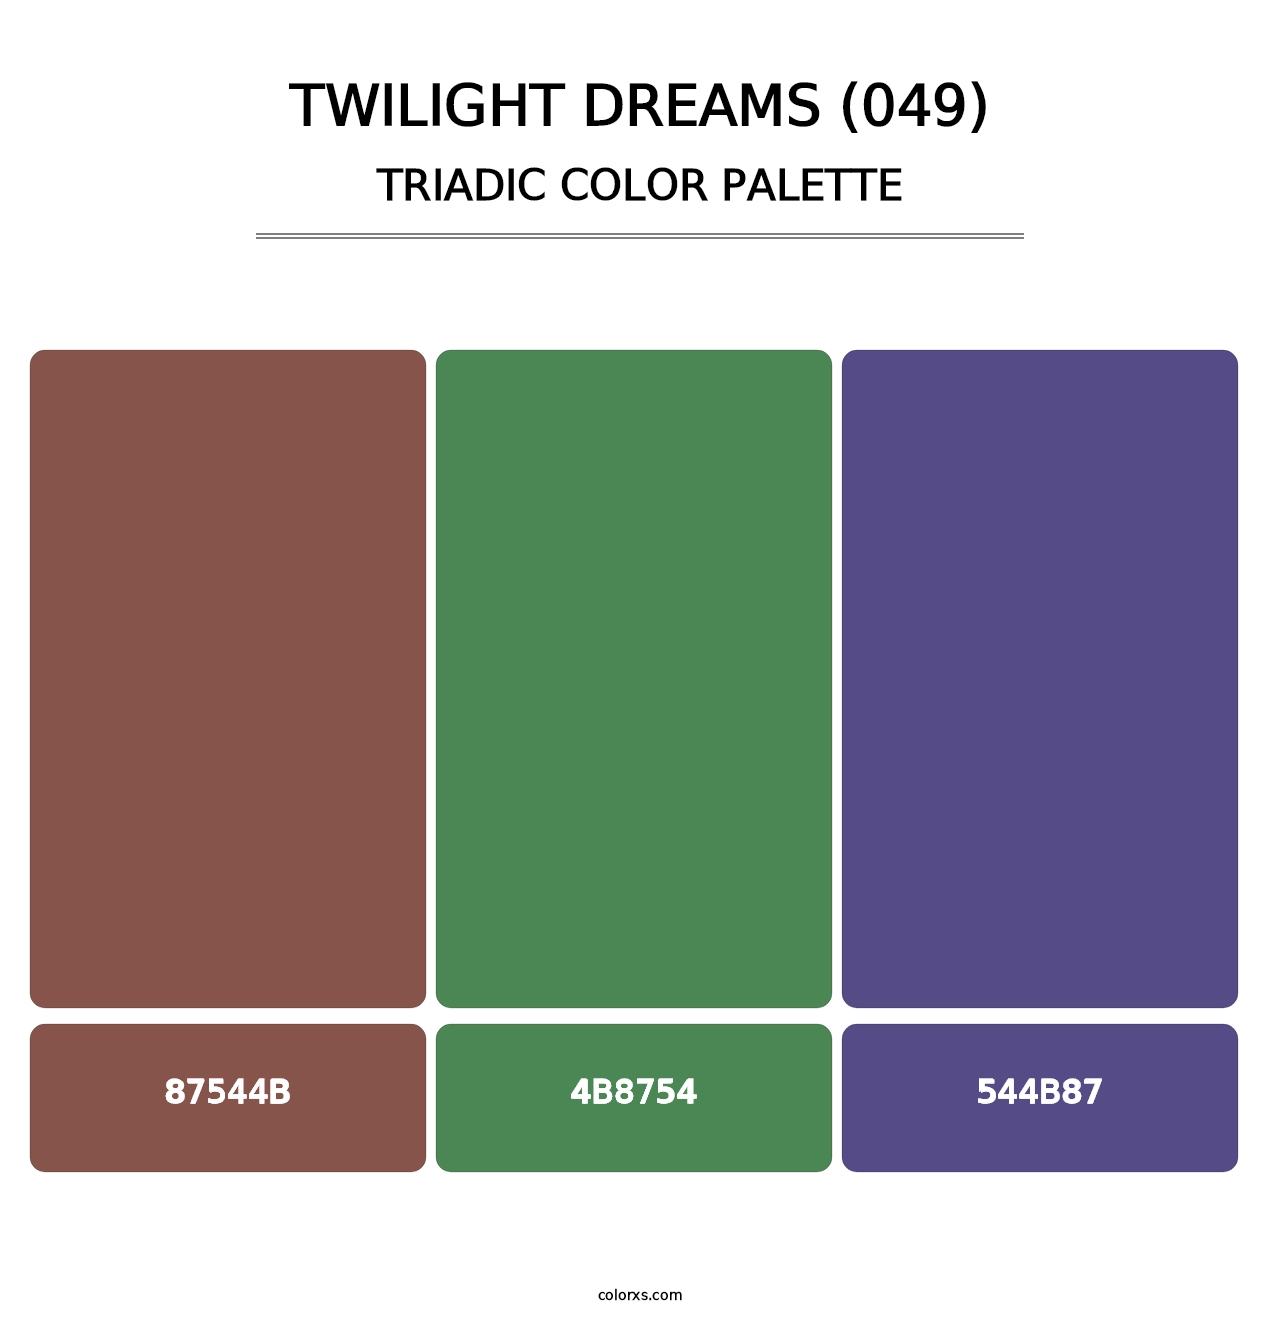 Twilight Dreams (049) - Triadic Color Palette